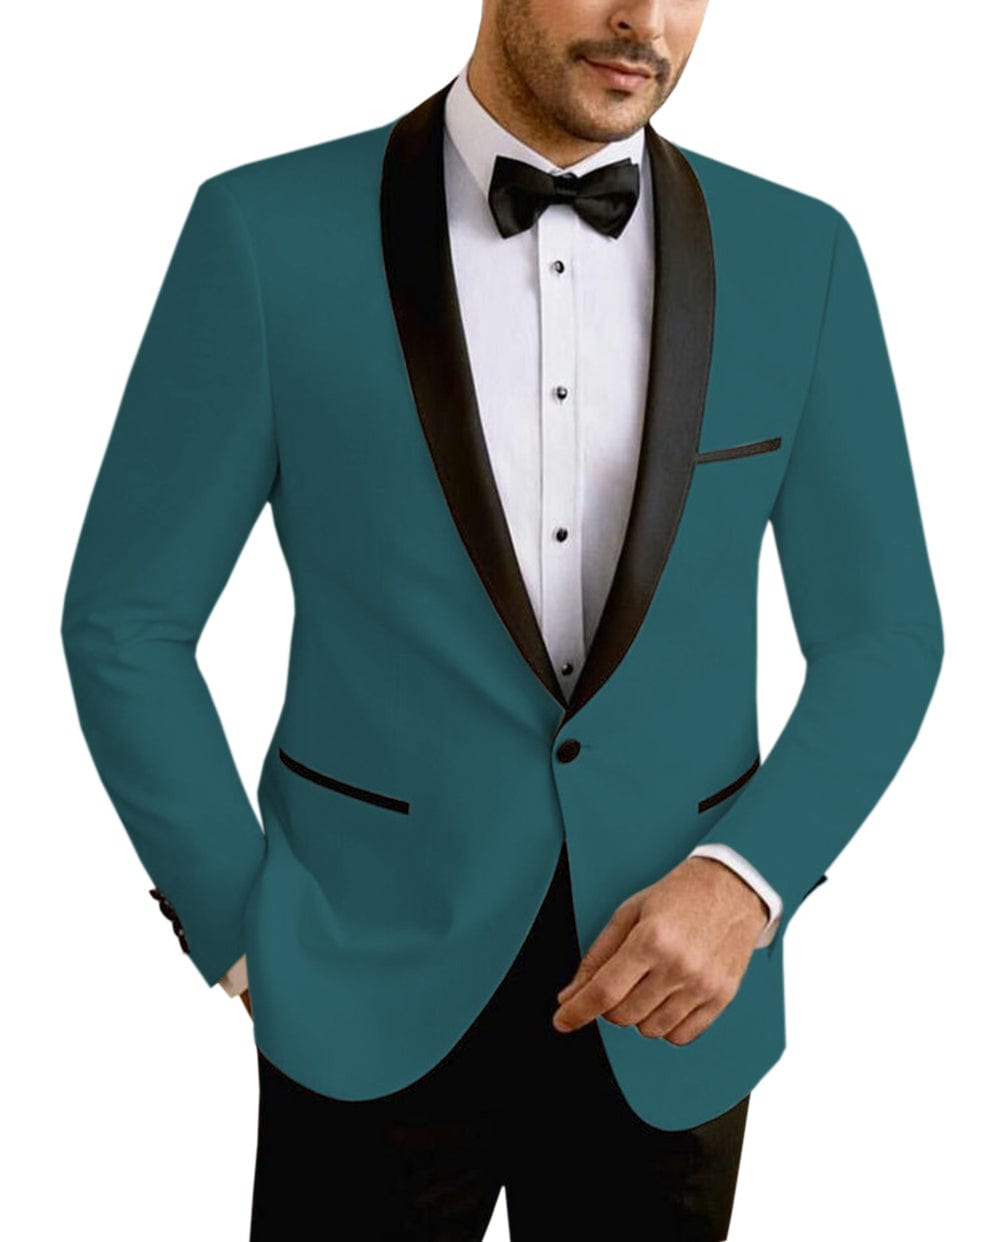 ceehuteey Men's Suit Jacket Slim Fit One Button Shawl Lapel Tuxedo Wedding Groomsmen Blazer